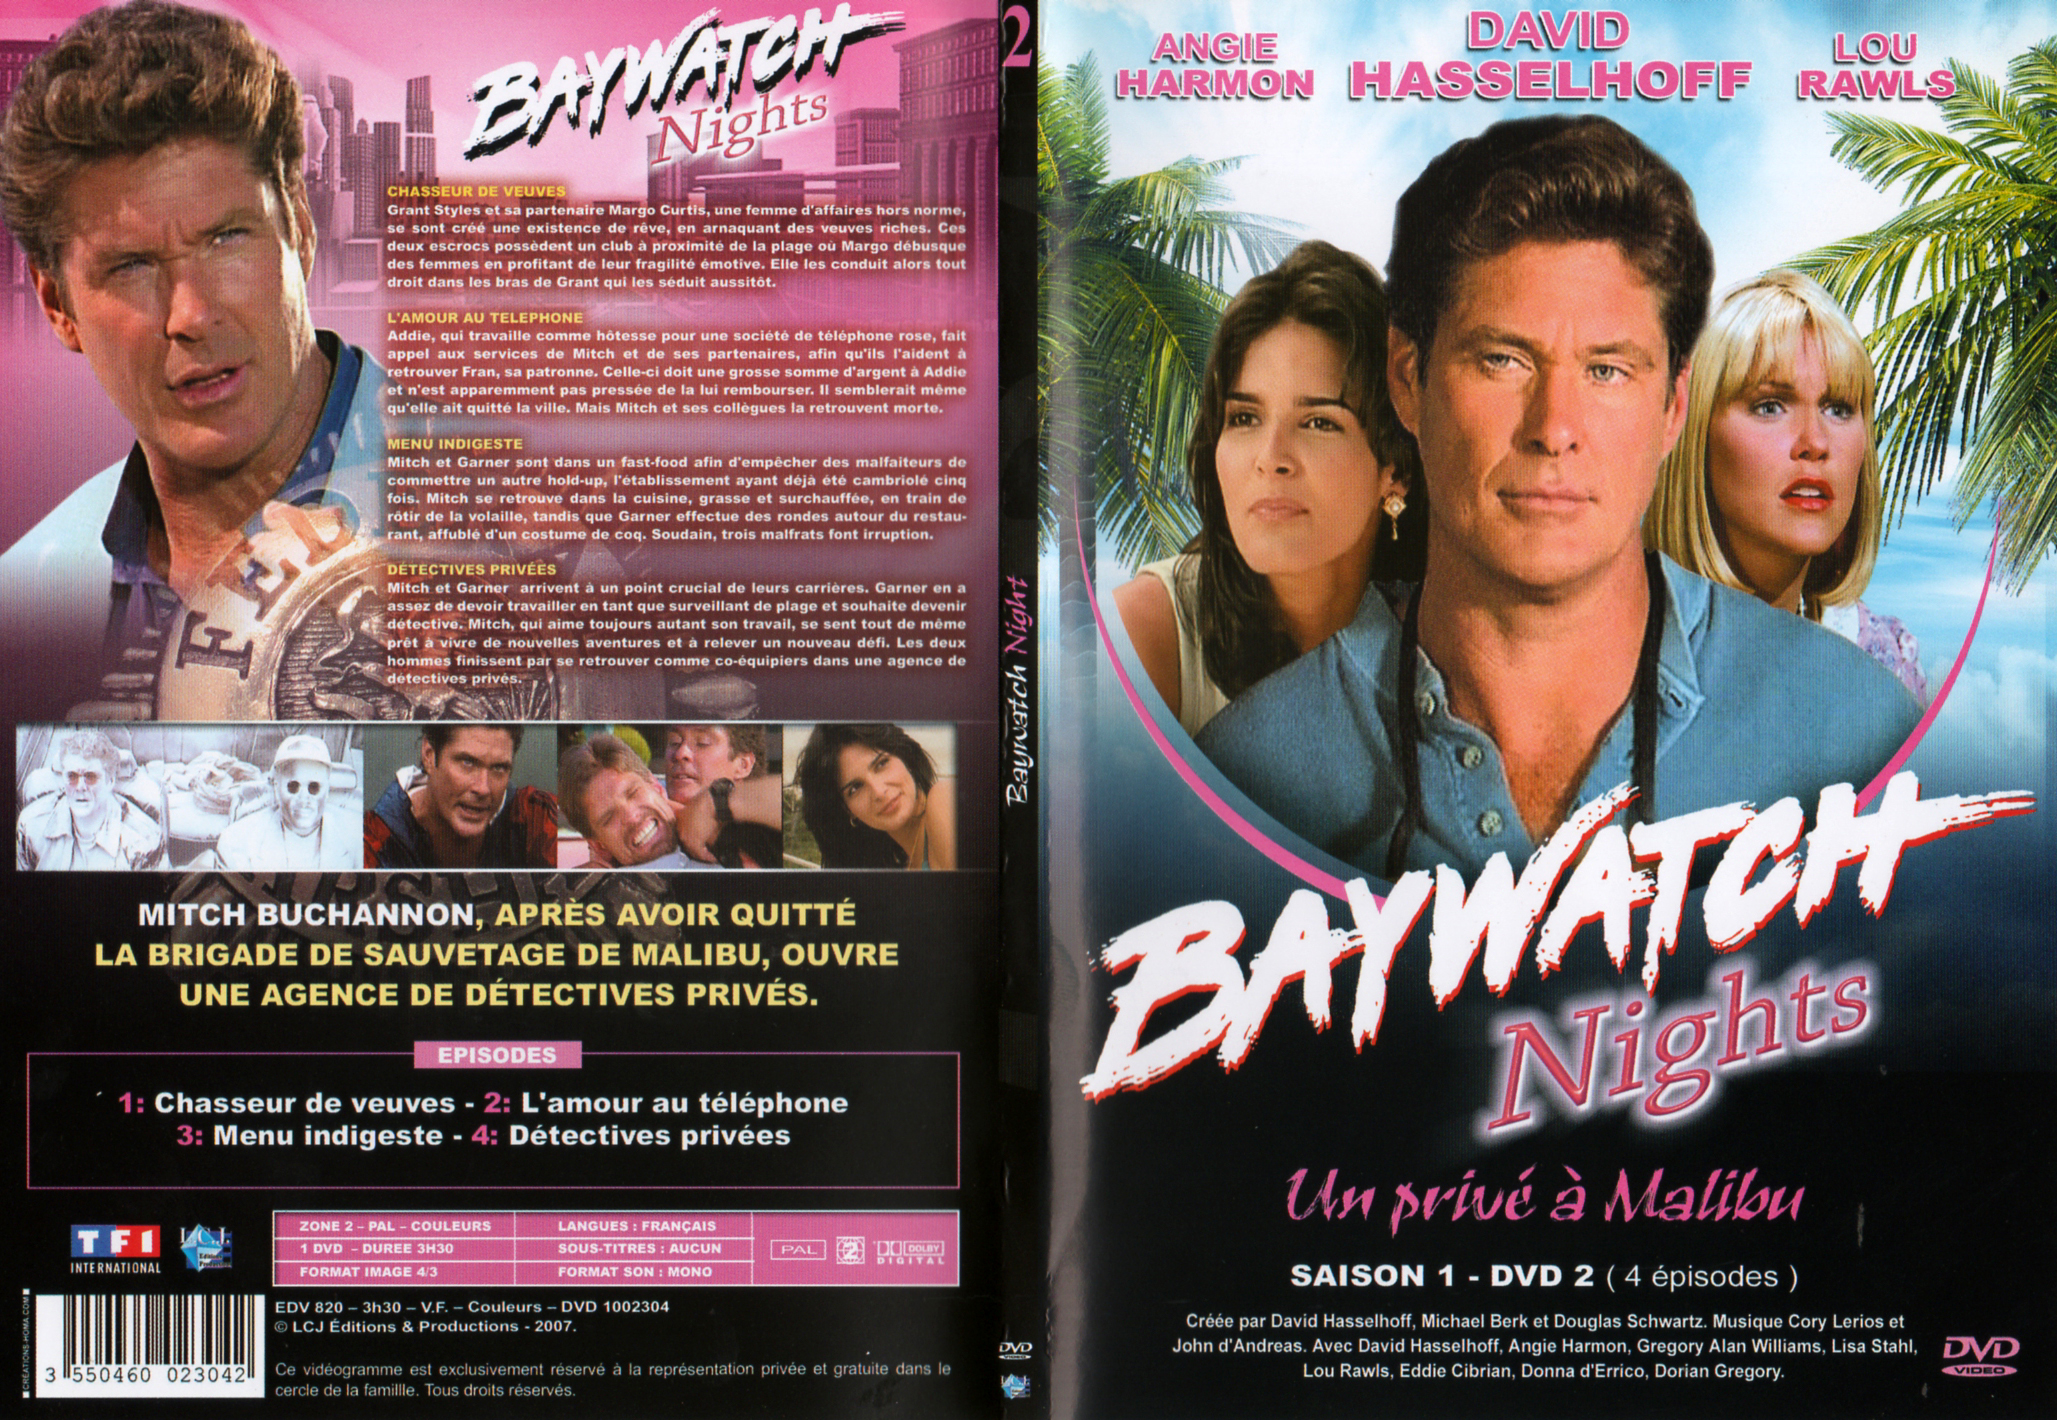 Jaquette DVD Baywatch nights Saison 1 DISC 2